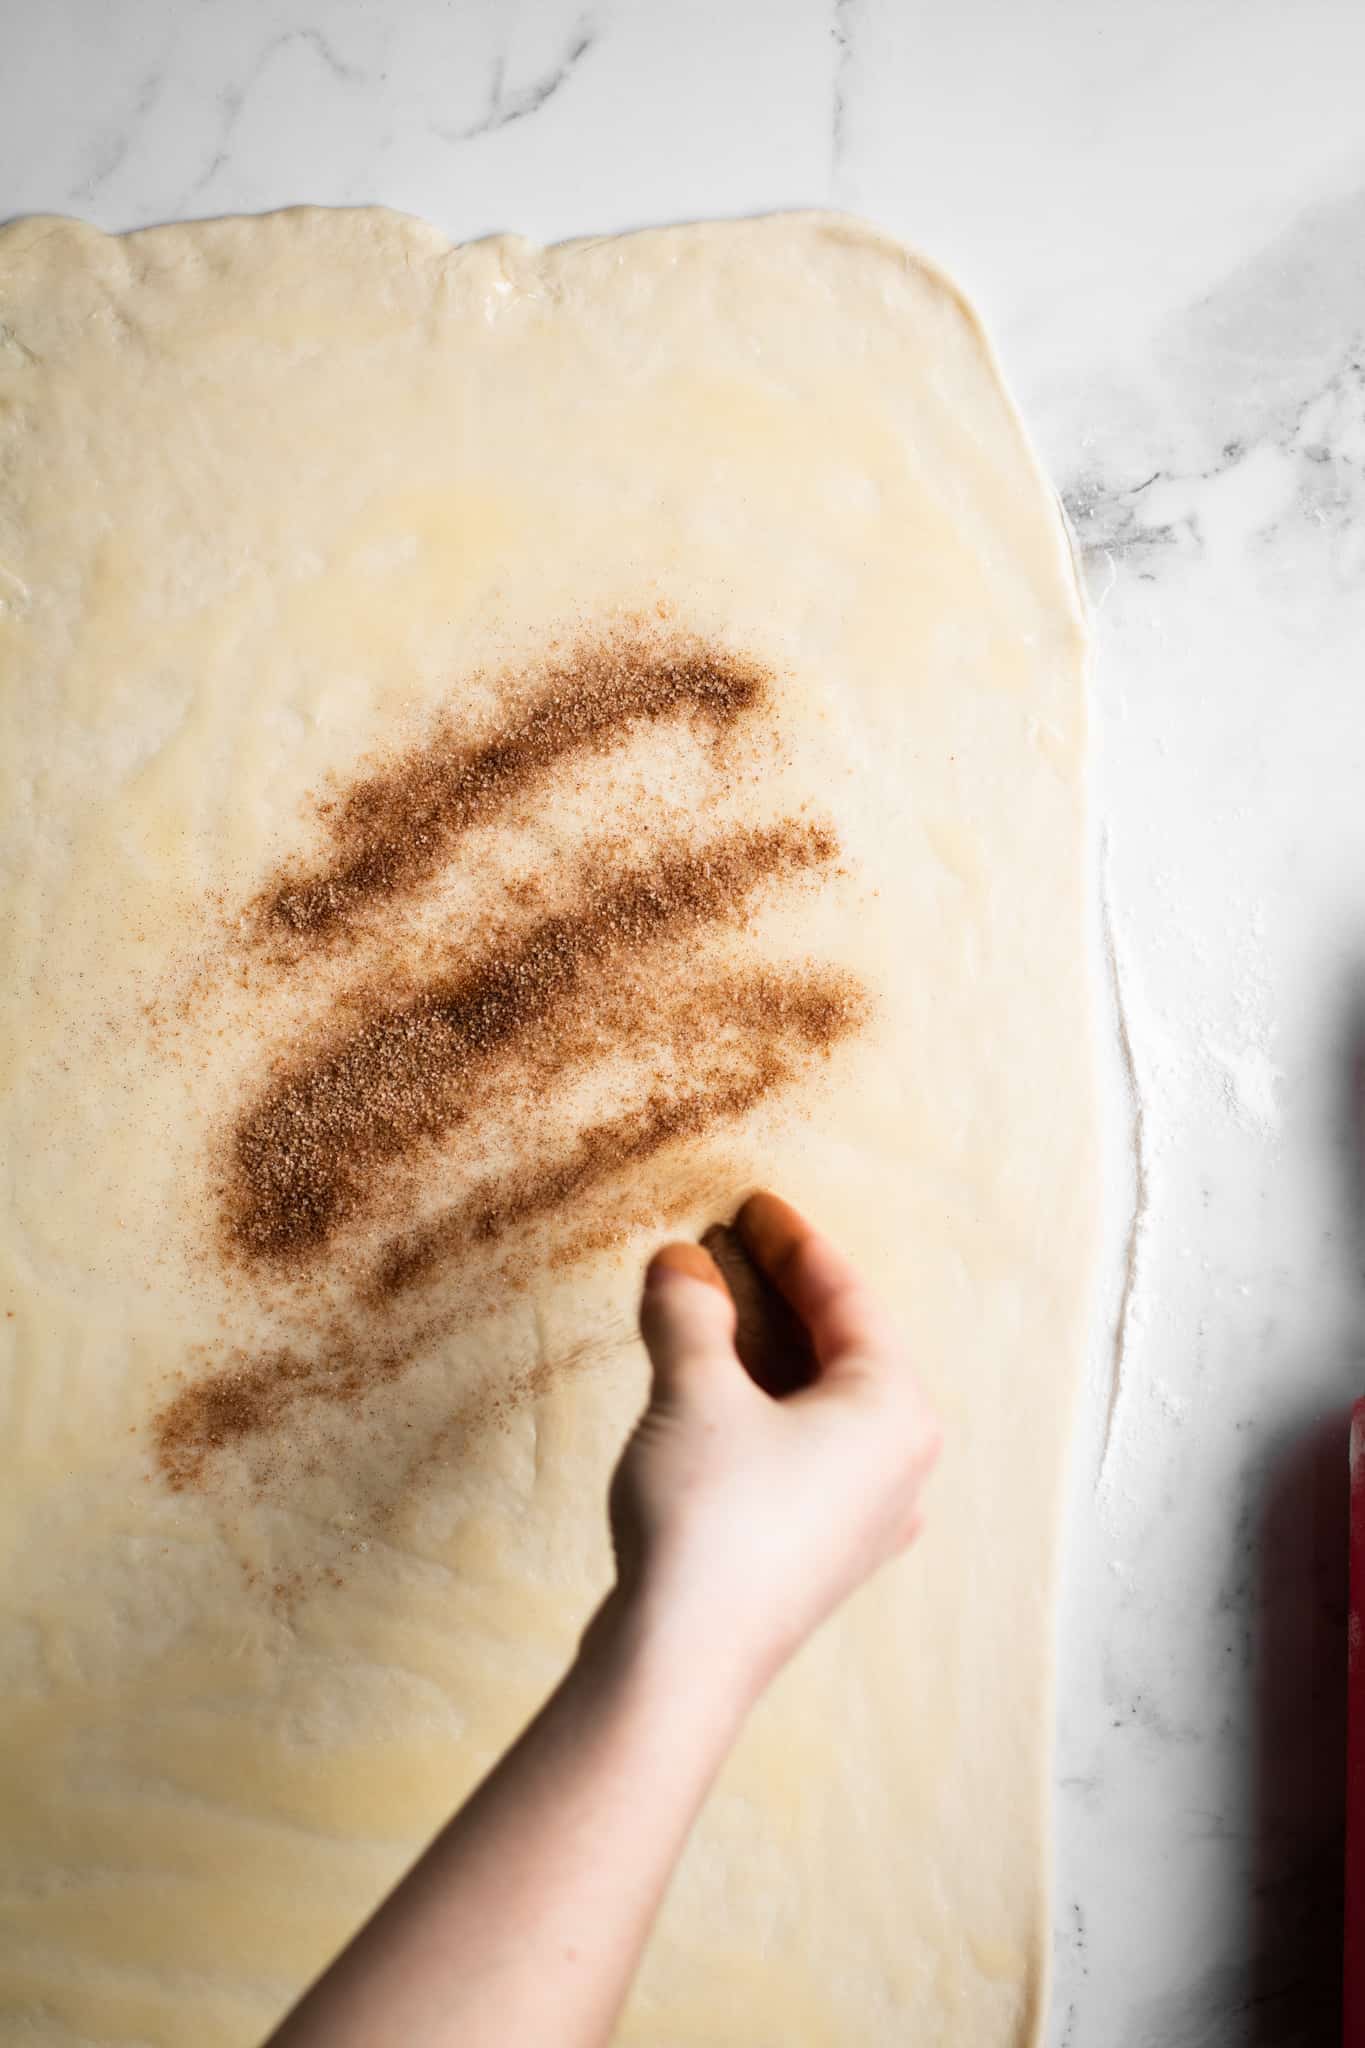 Hand dusting cinnamon sugar over the dough